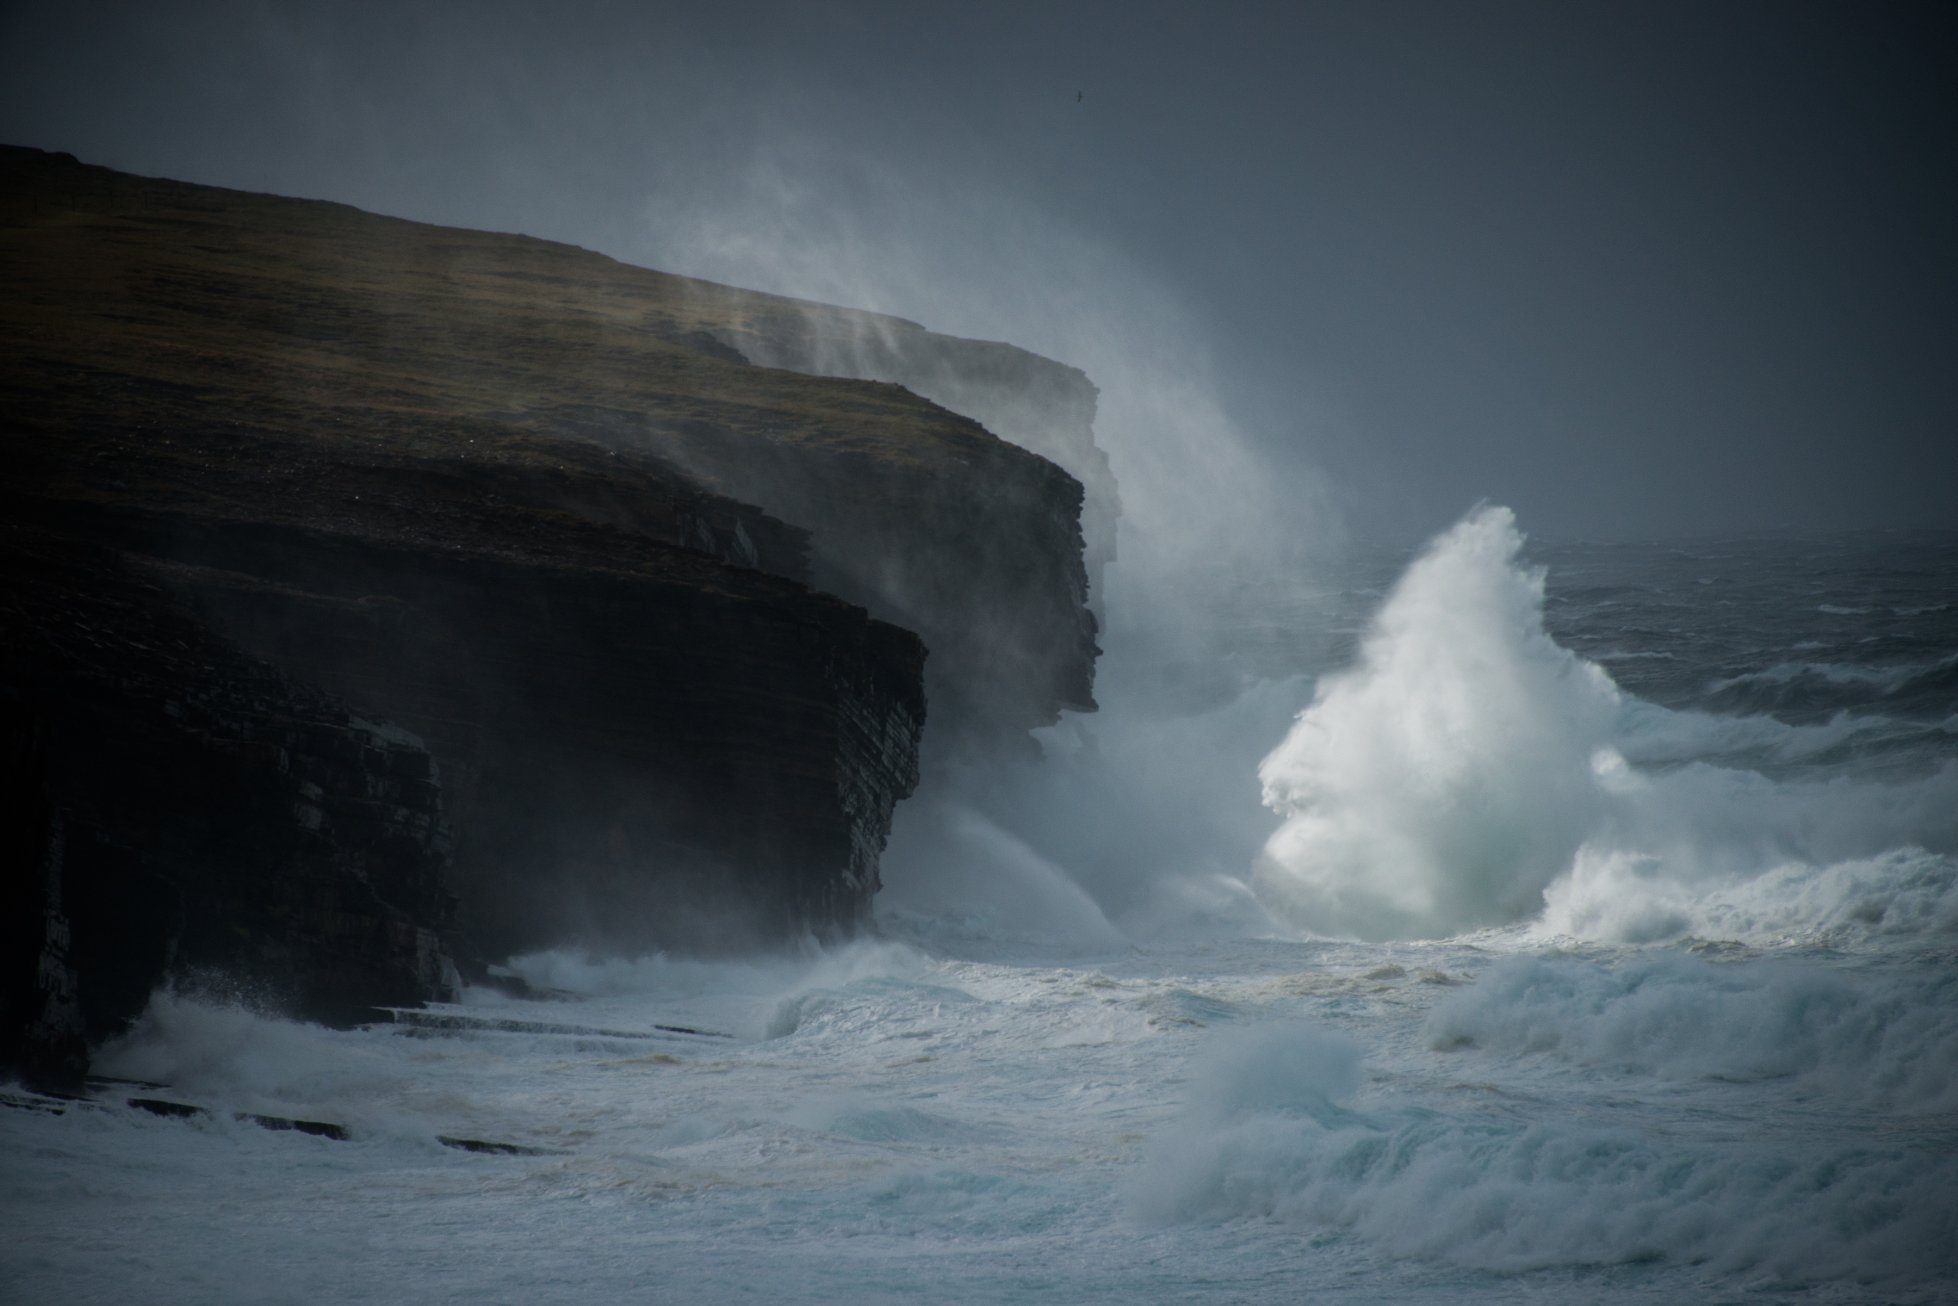 Wild Orkney coastline - image by Margaret Soraya